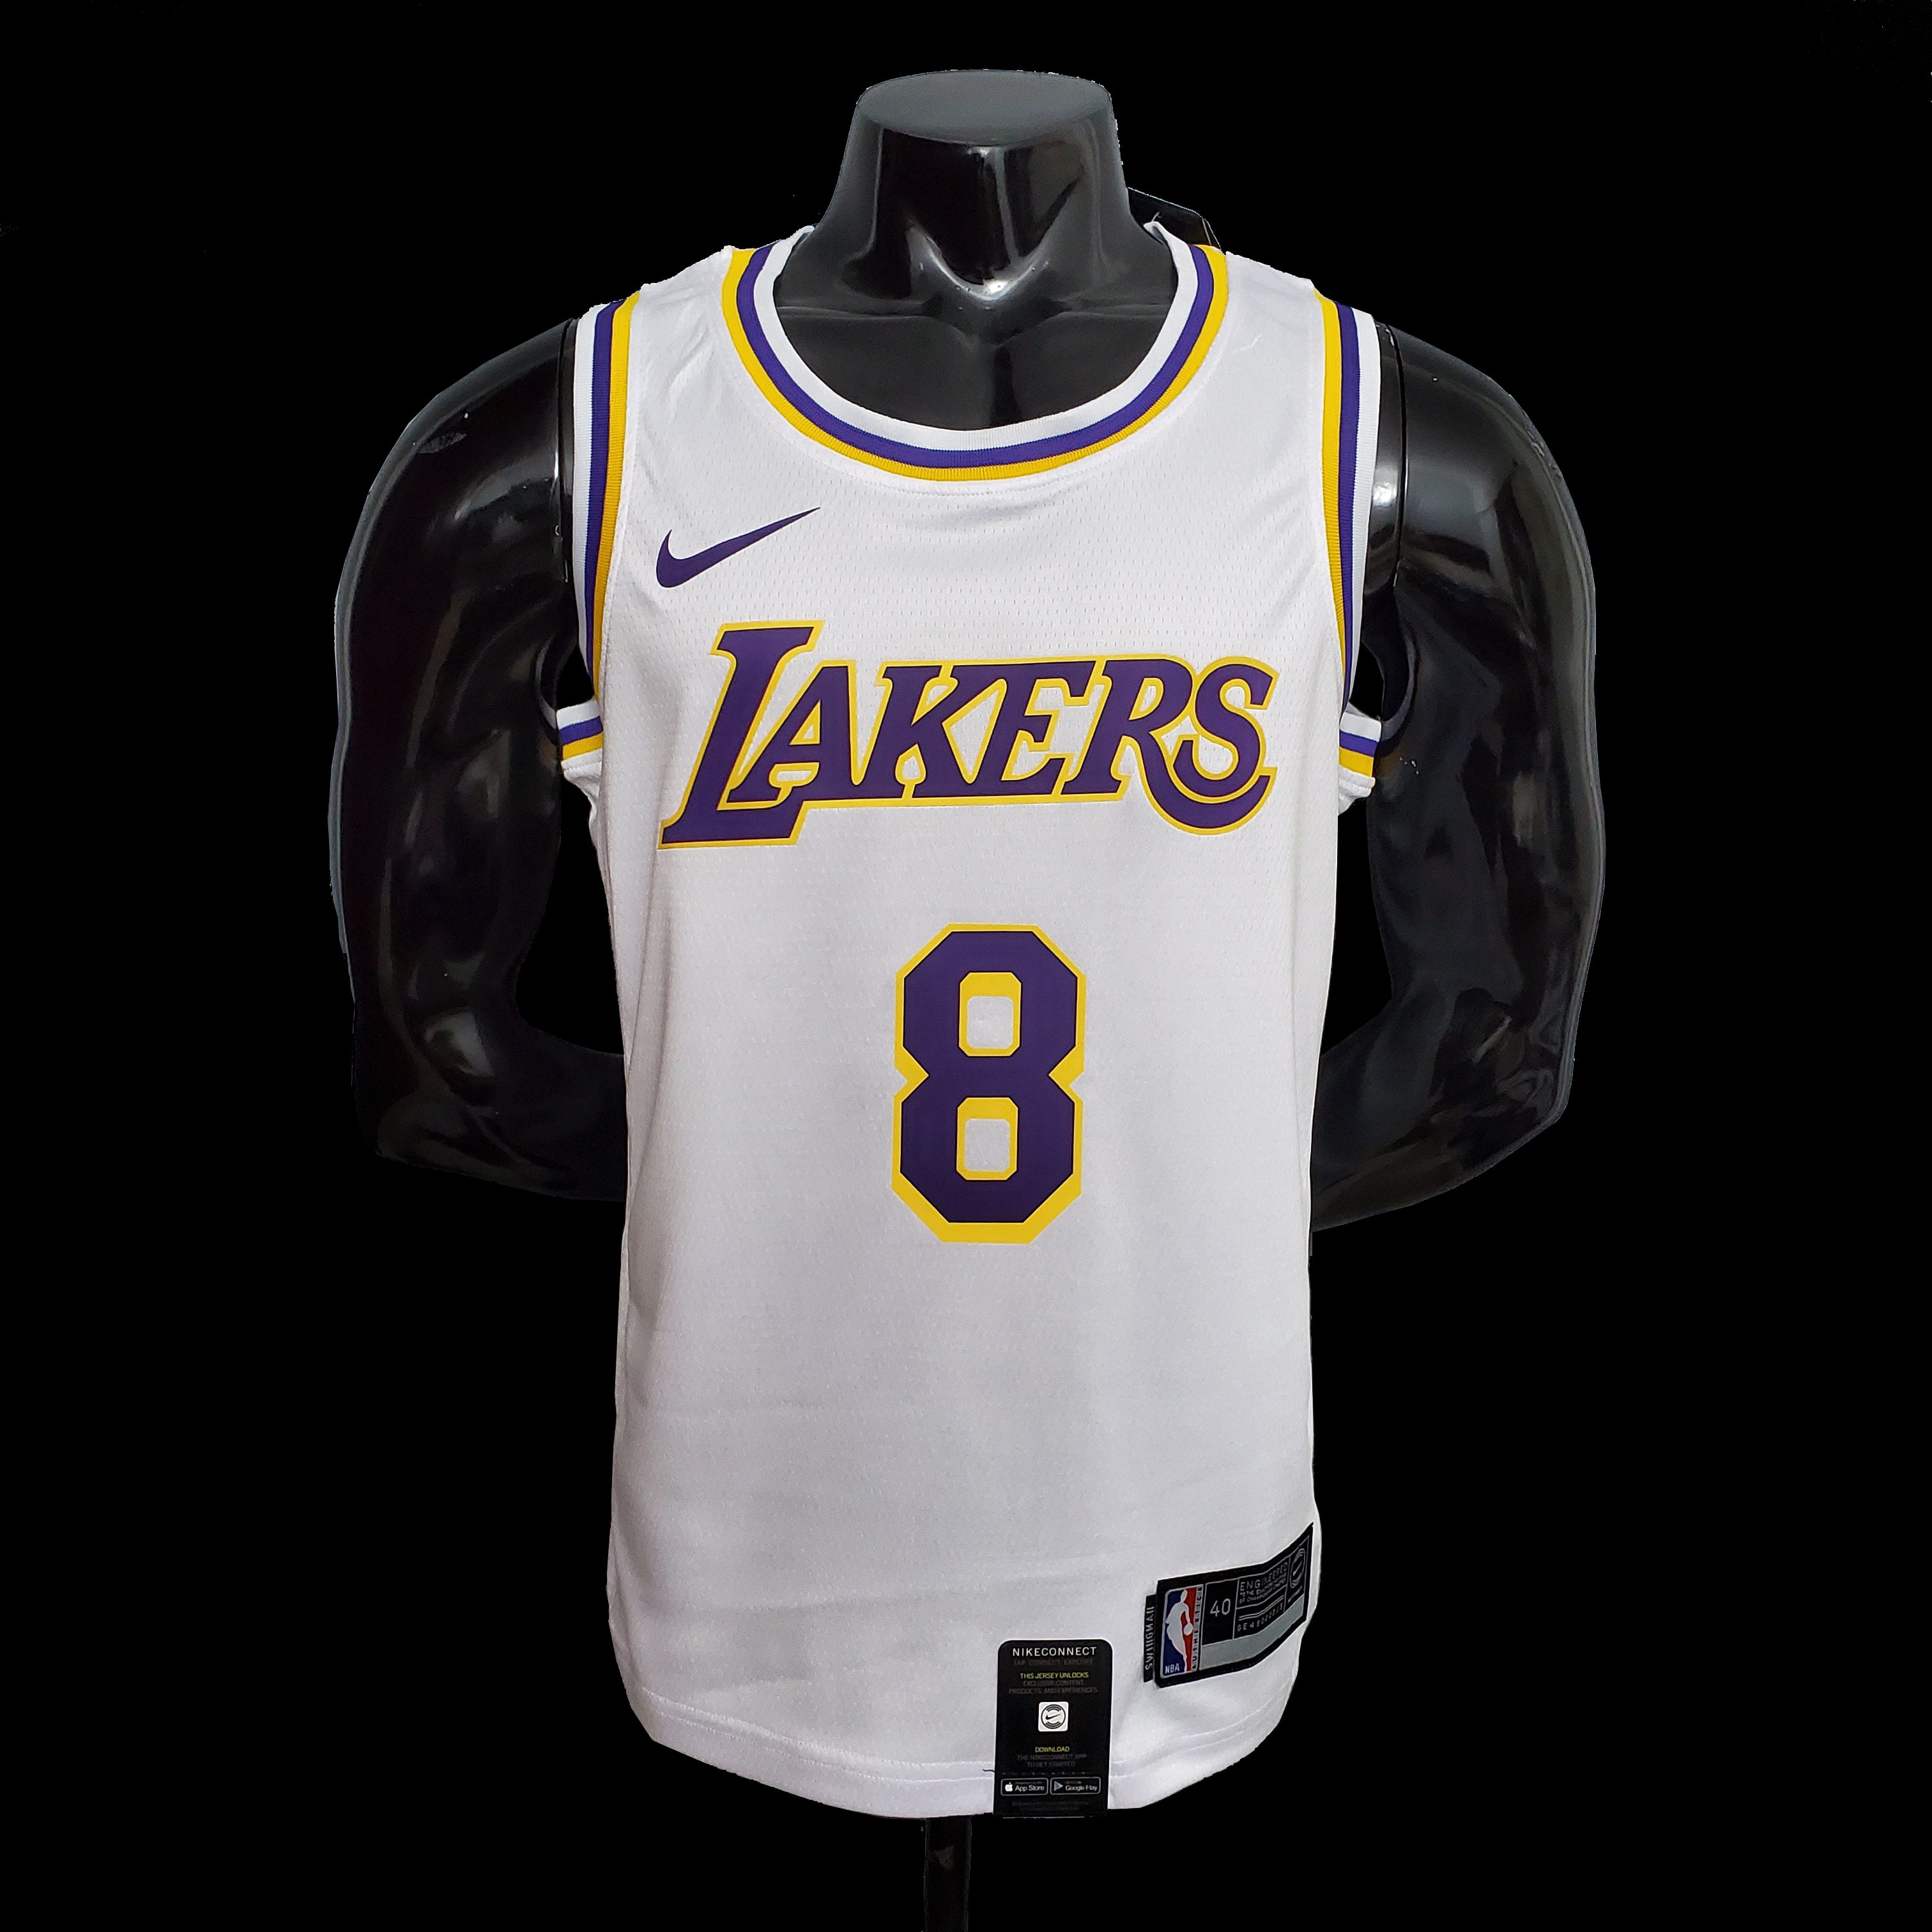 Kobe Bryant Los Angeles Lakers 8 Jersey